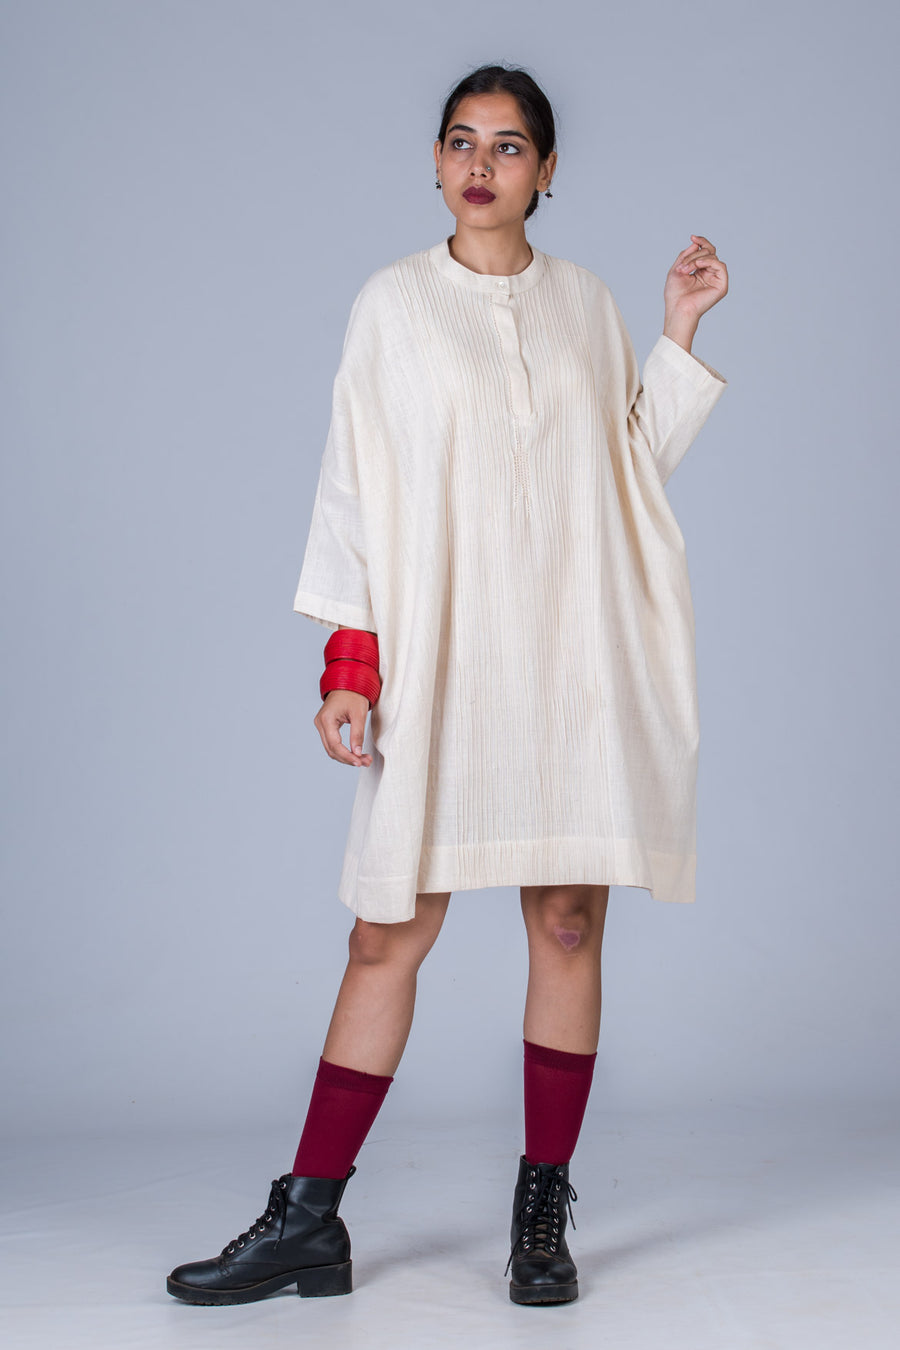 Off White Desi Cotton Dress - MUKTA - Upasana Design Studio